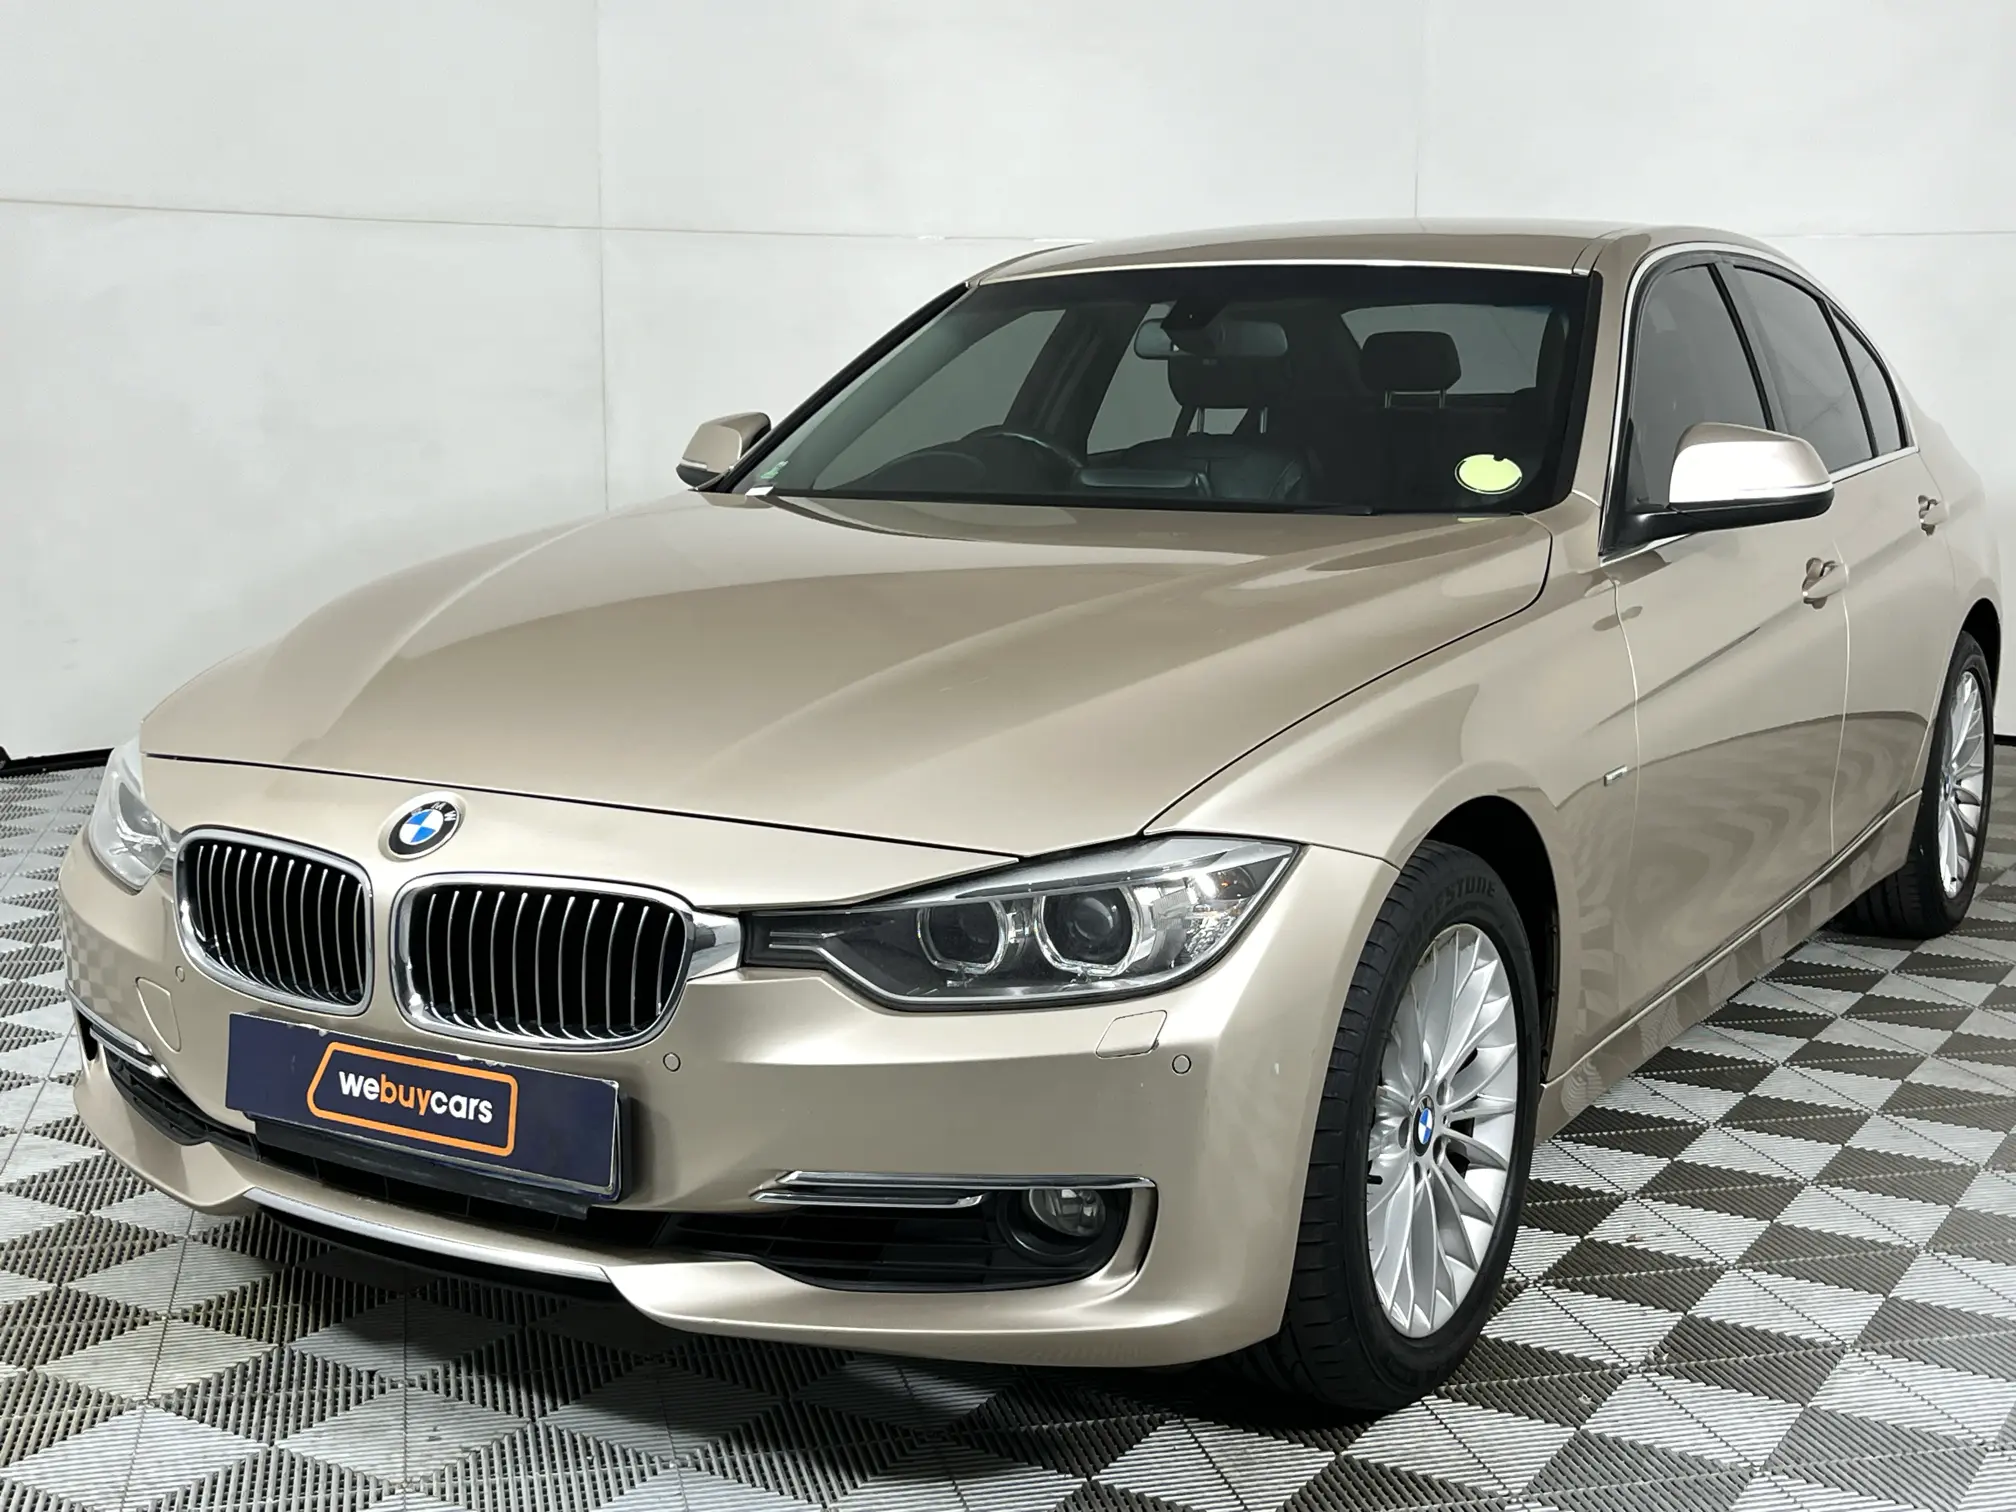 2012 BMW 3 Series 320i Luxury Line Auto (F30)